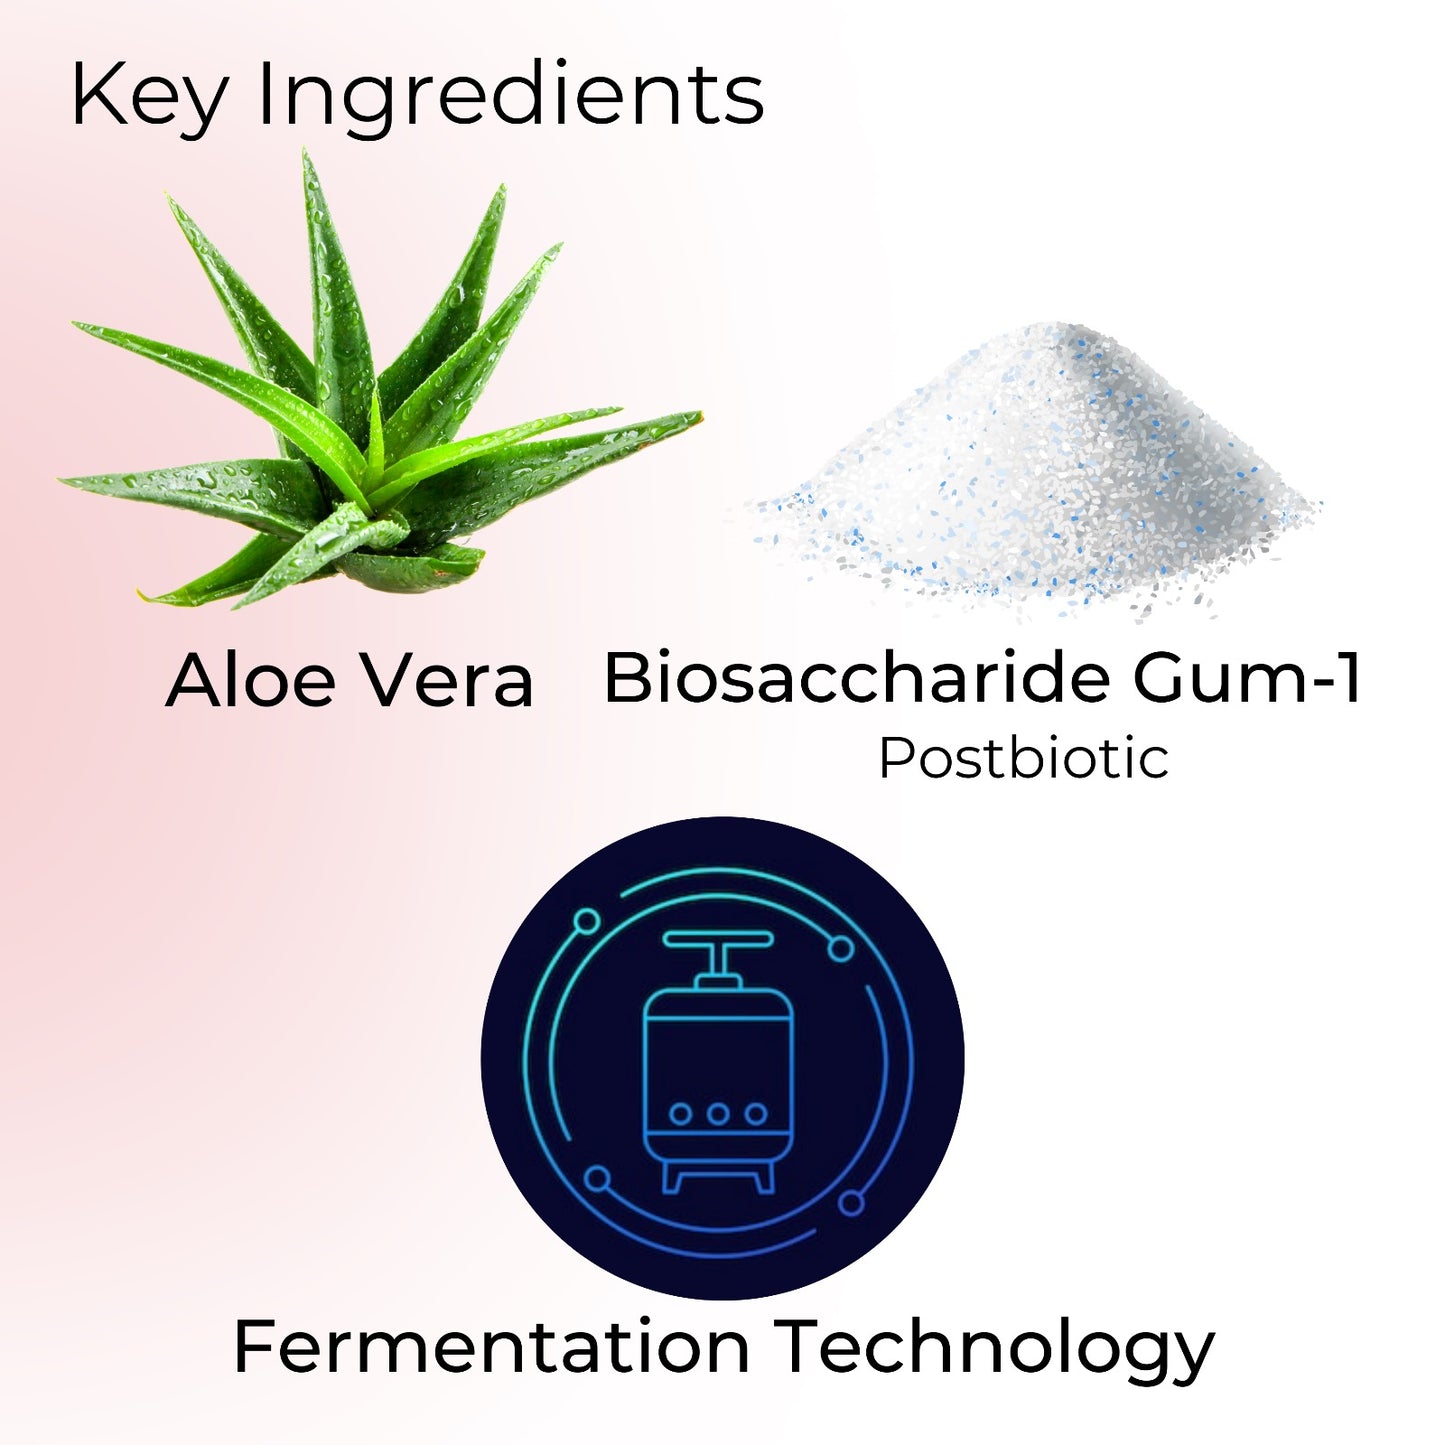 Key Ingredients of Super Nourishing Toner: Aloe Vera, Biosaccharide Gum-1 (a postbiotic) and Fermentation Technology.